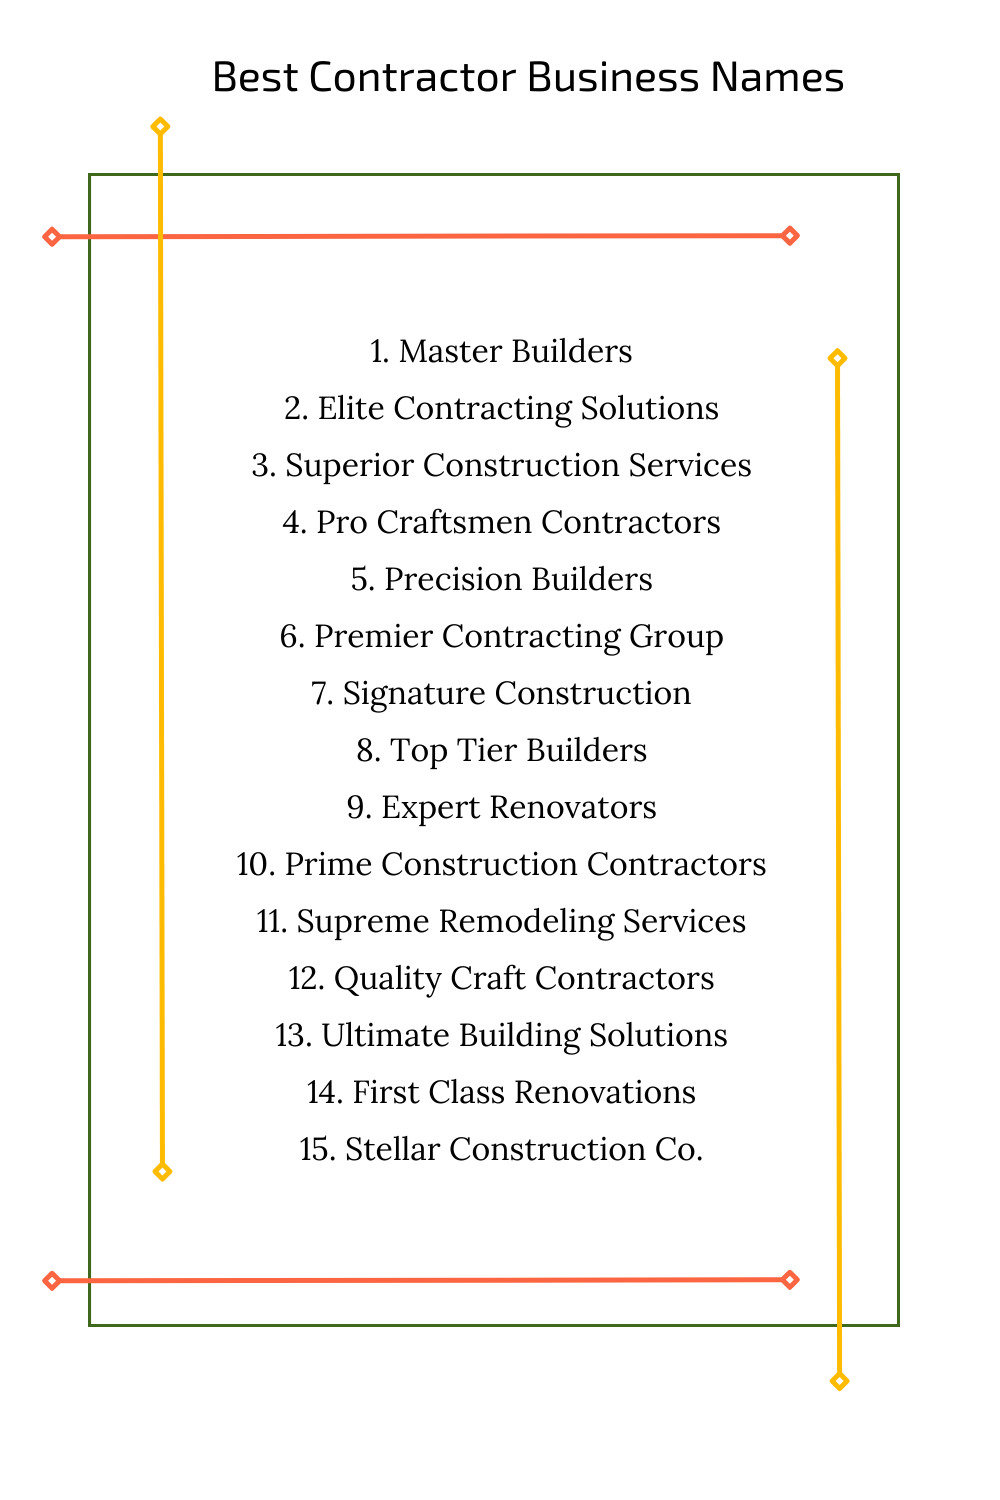 Best Contractor Business Names